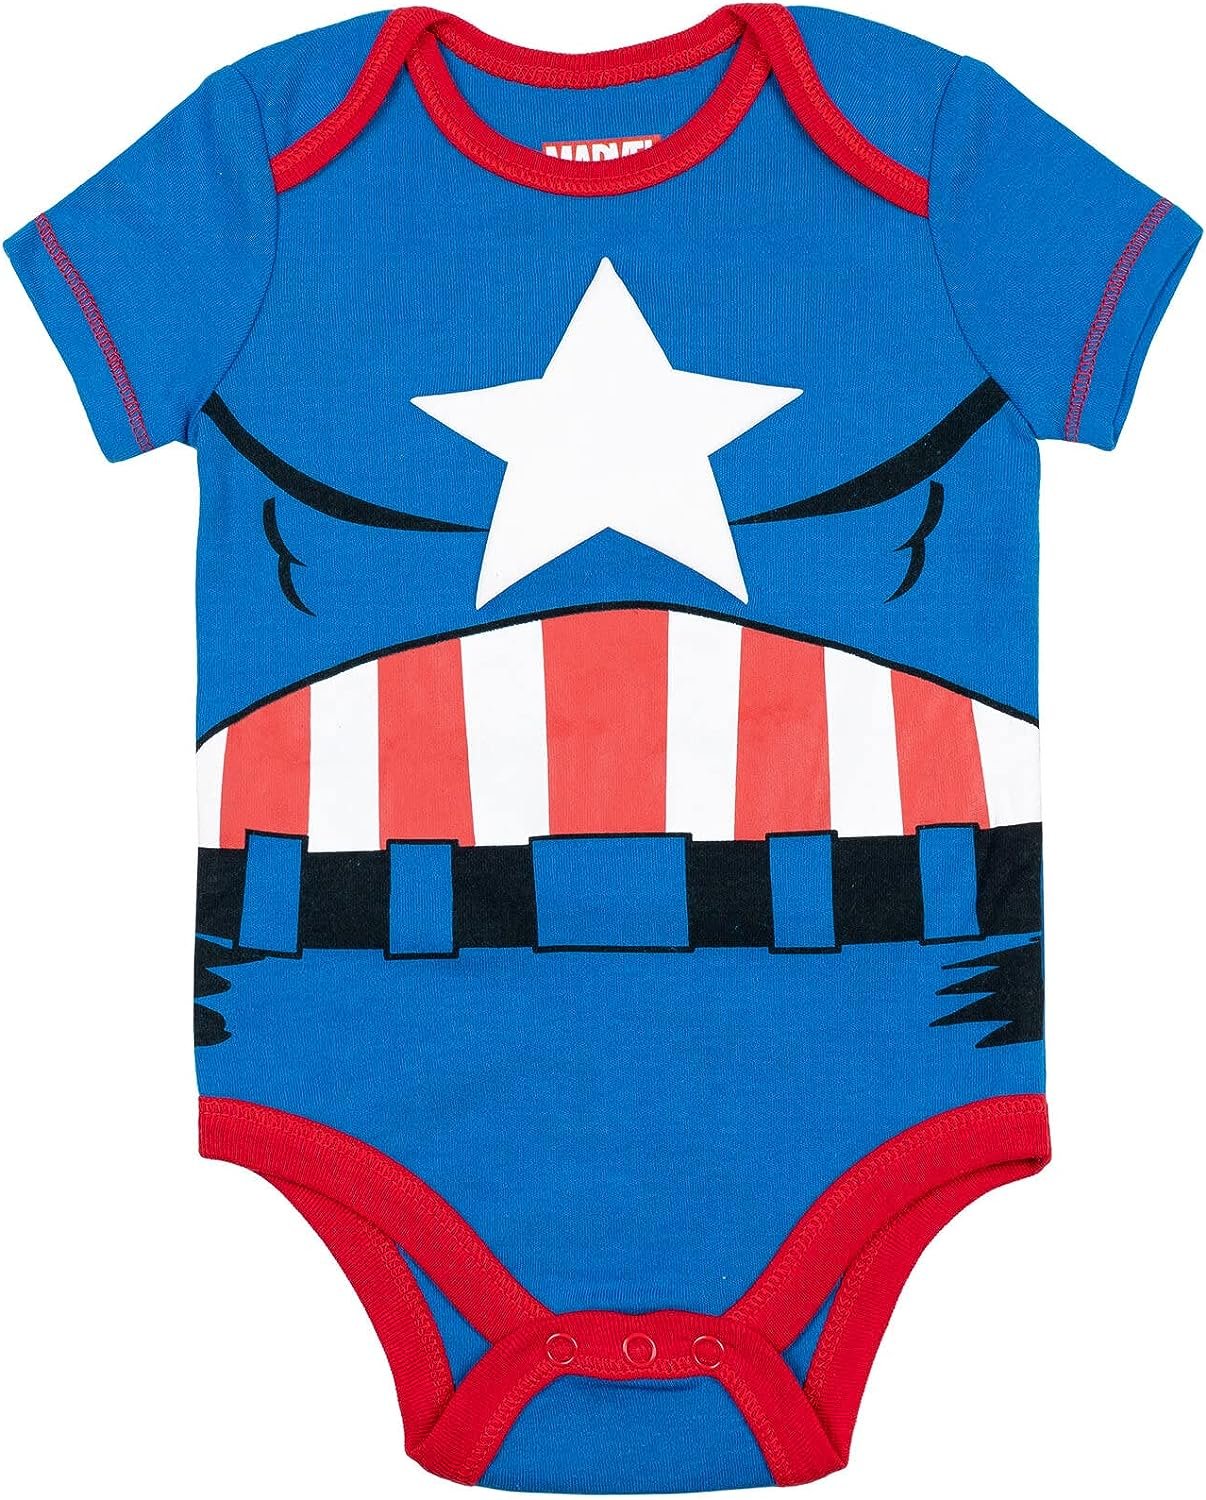 Marvel Baby Boys 5 Pack Bodysuits - The Hulk, Spiderman, Iron Man, and Captain America